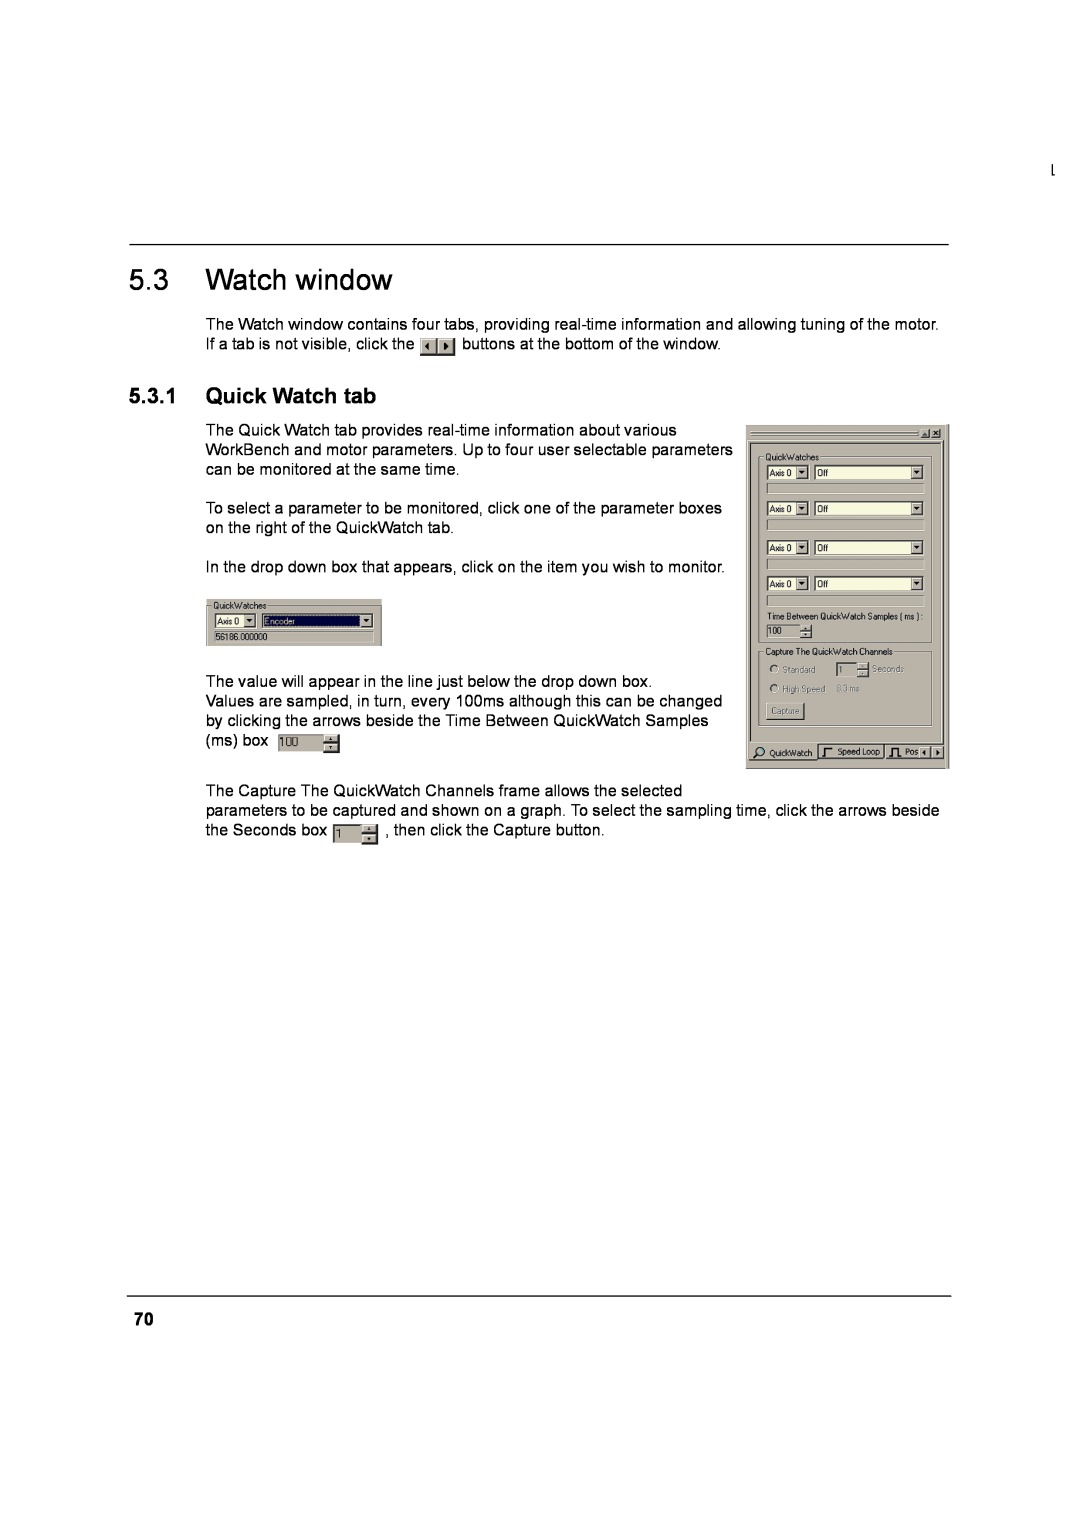 Baldor MN1274 06/2001 installation manual Watch window, Quick Watch tab 